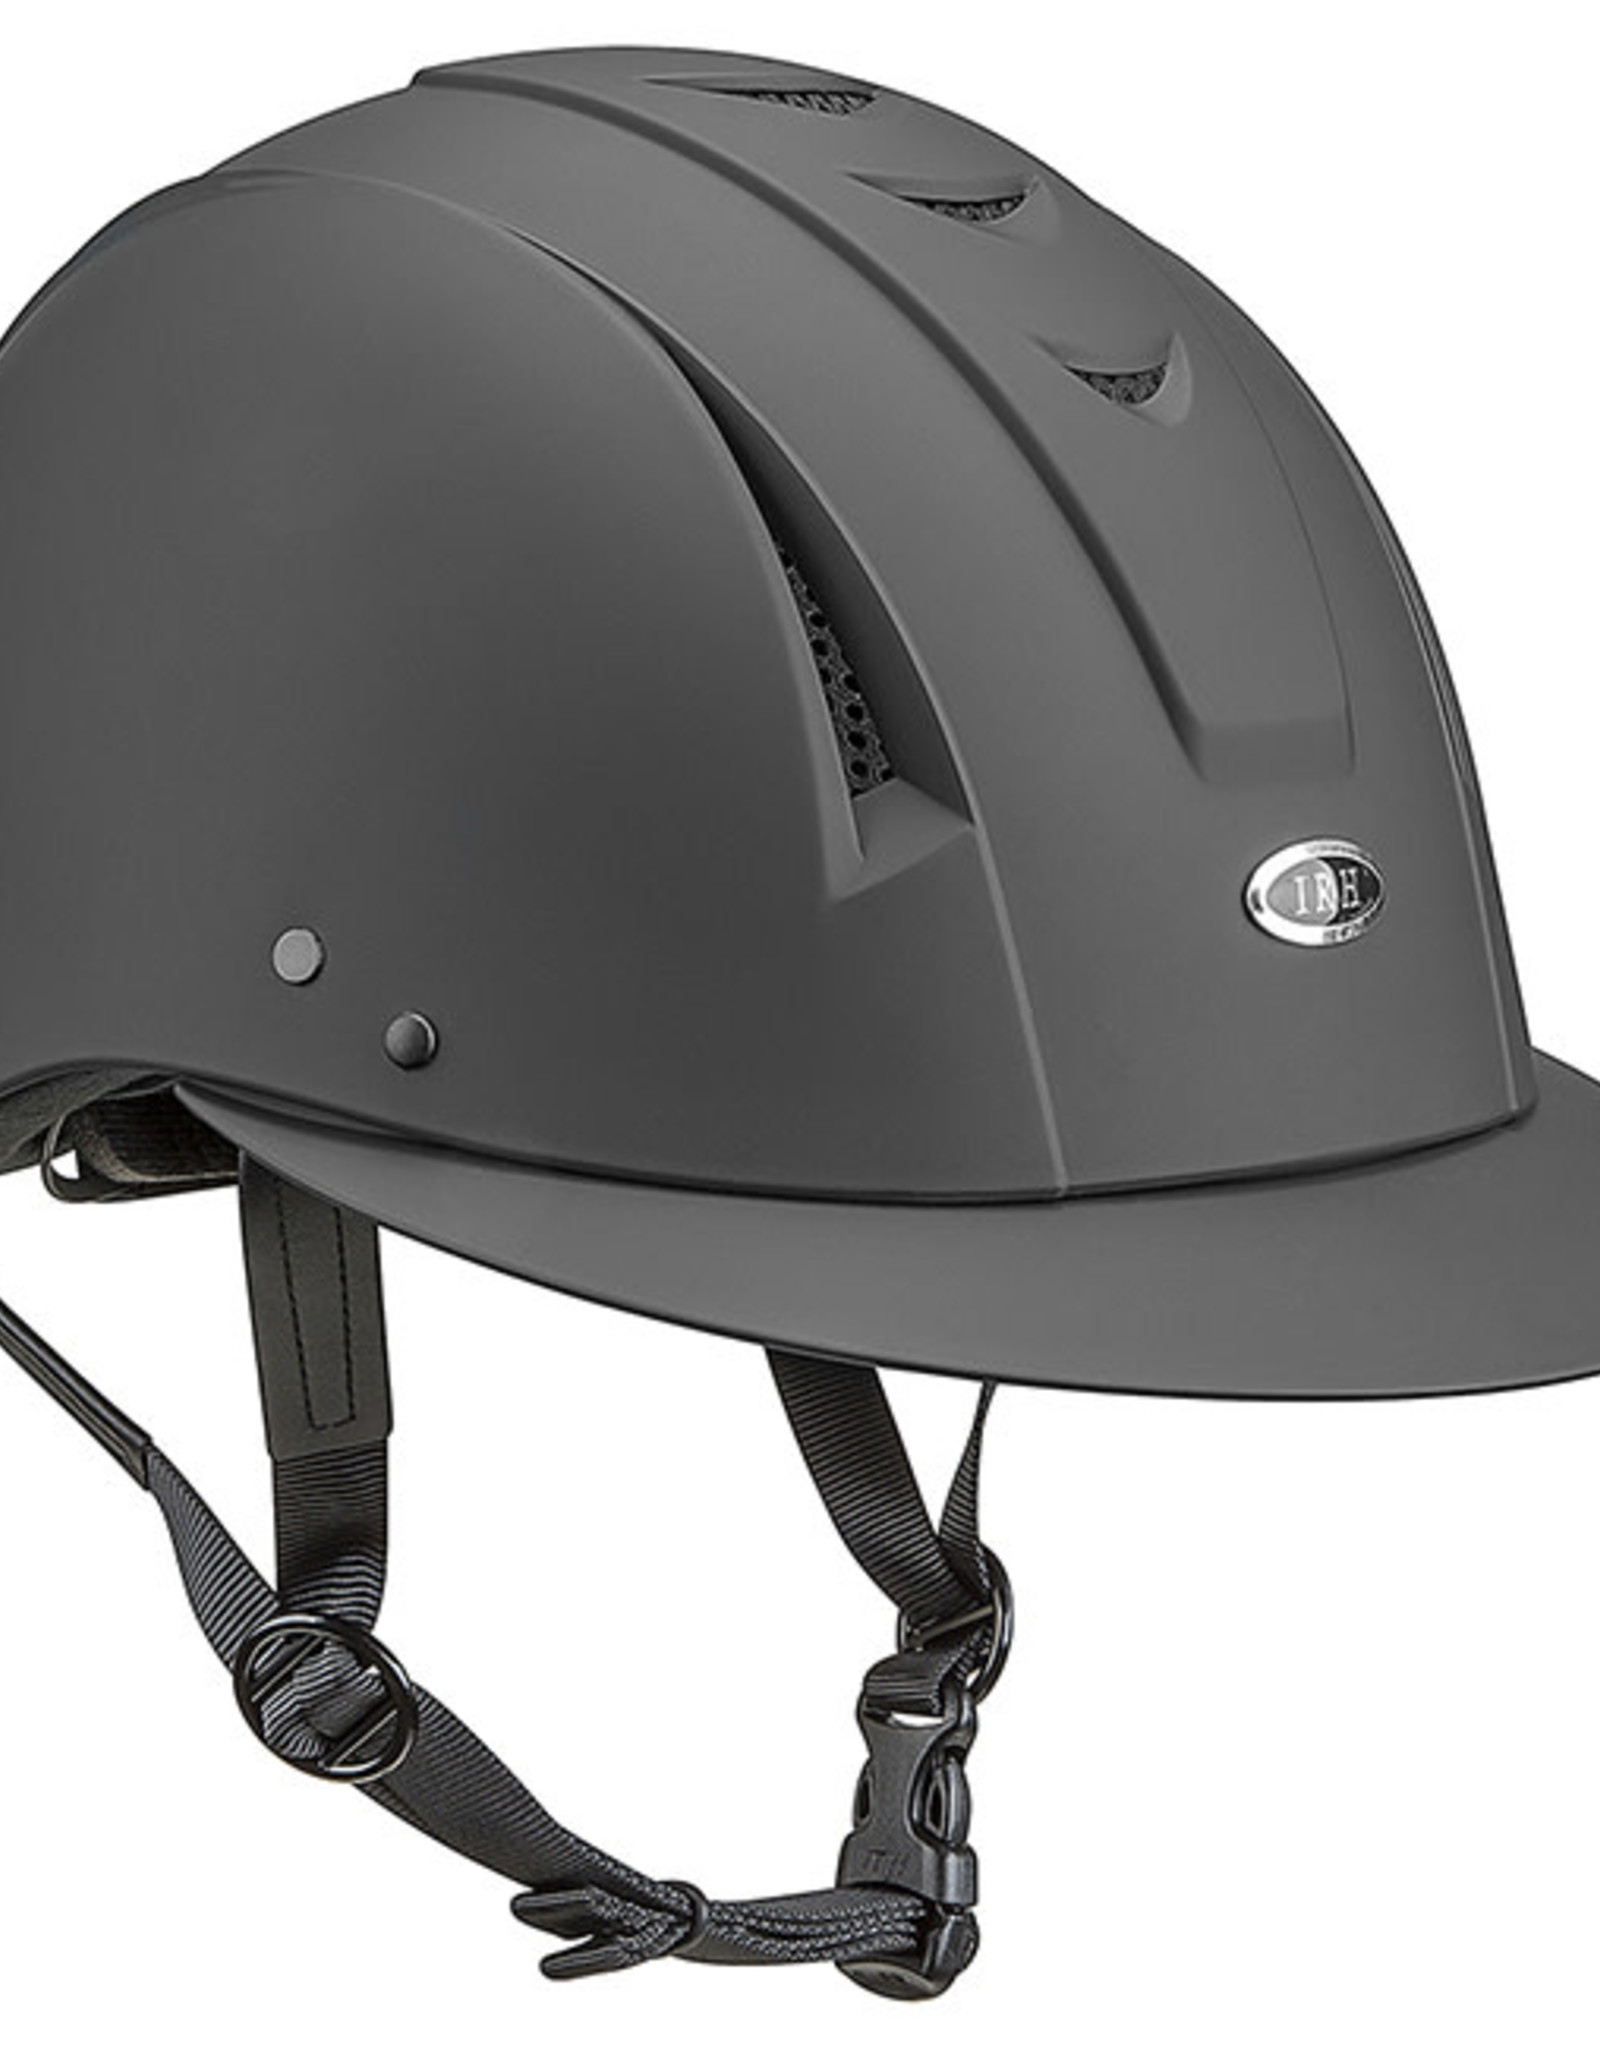 IRH Equi Pro SV helmet